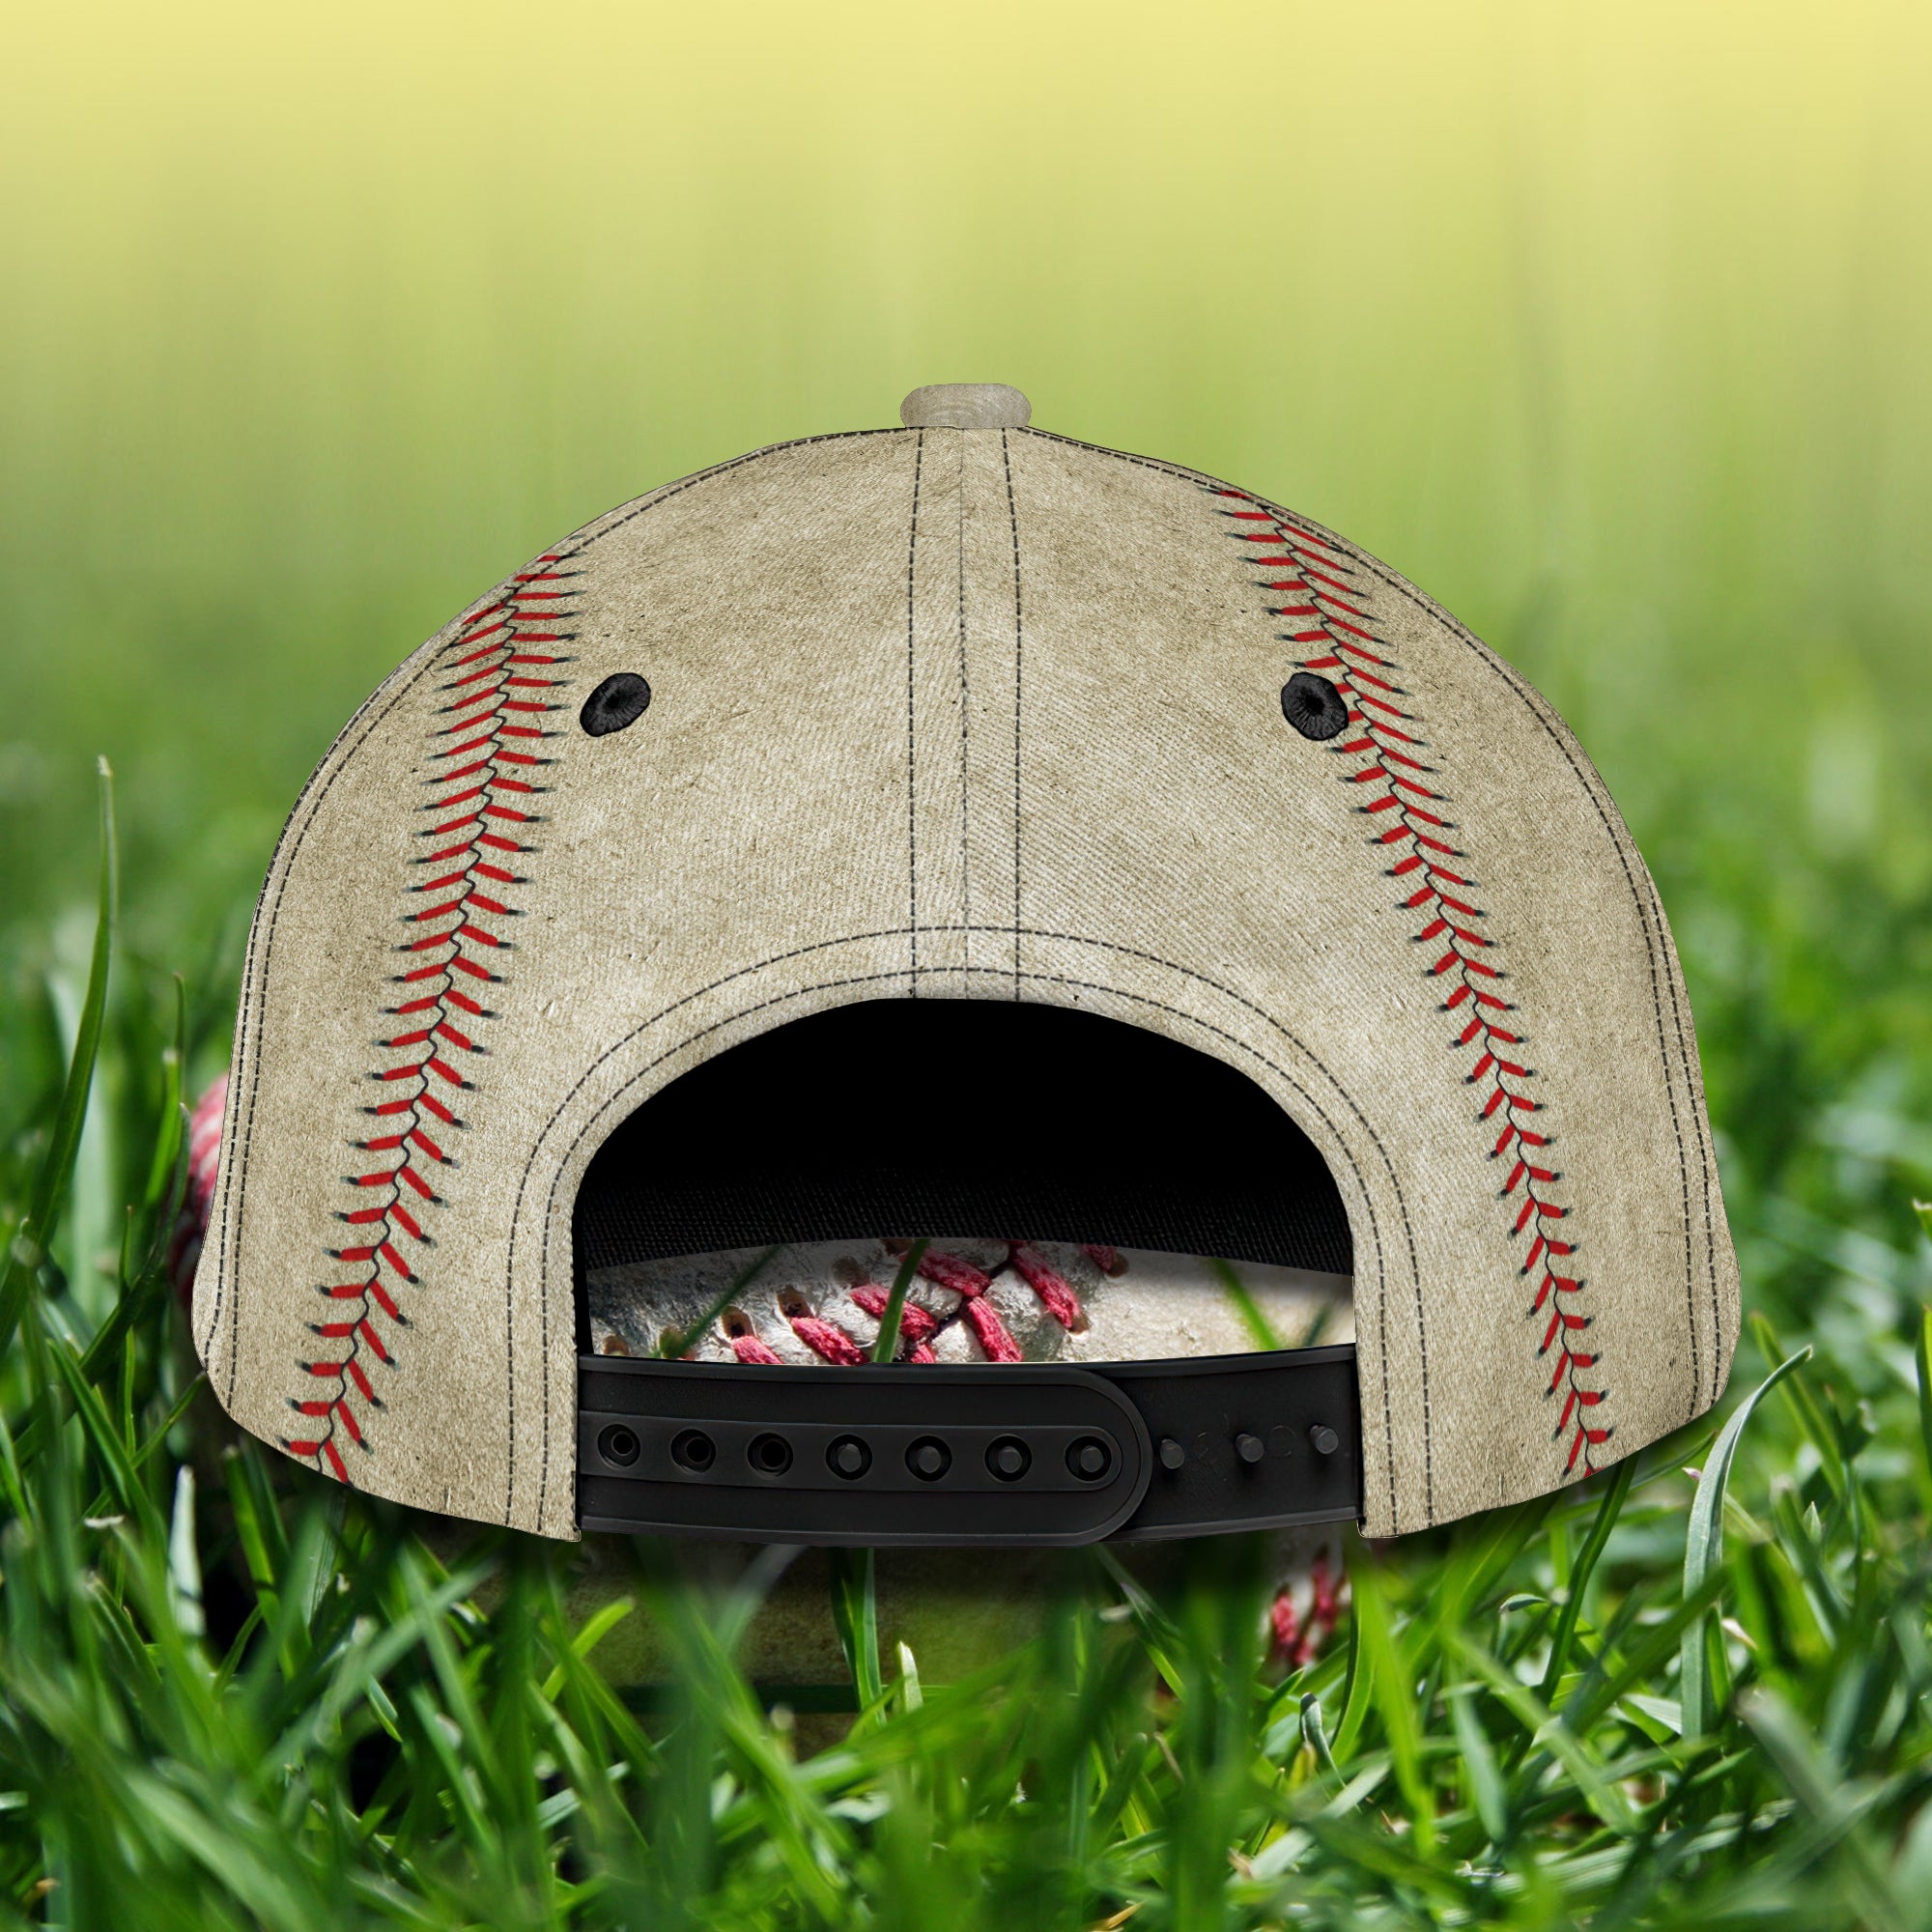 Baseball - Personalized Name Cap - Nmd